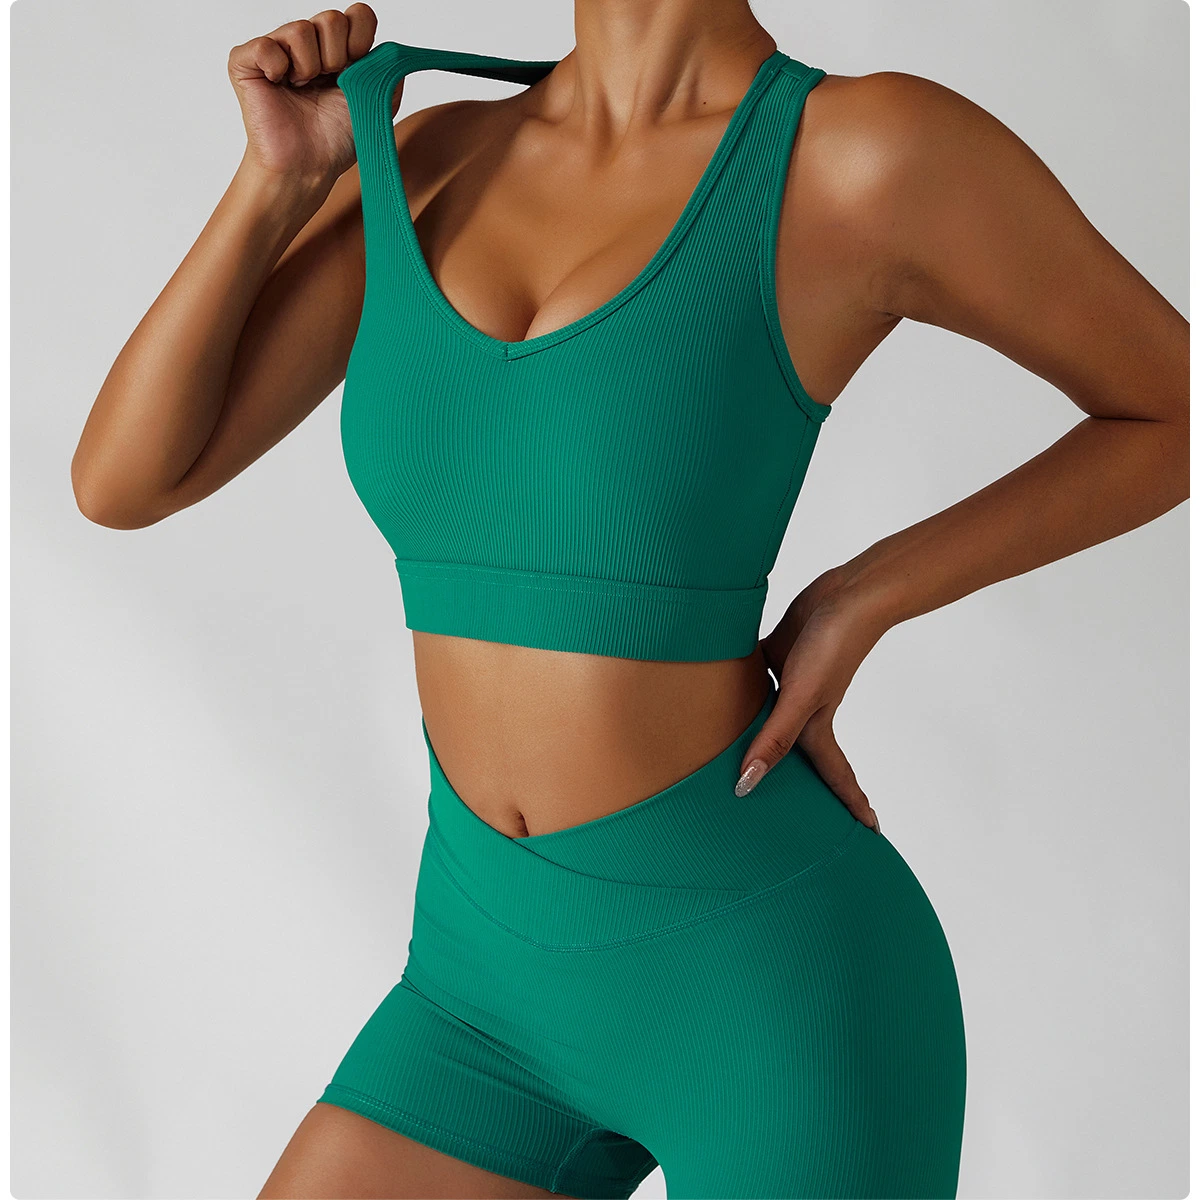 2PCS Women Sport Suit Gym Set Sexy Bra Seamless Shorts Workout Running Clothing Gym Wear Athletic Yoga Set Yoga Wear